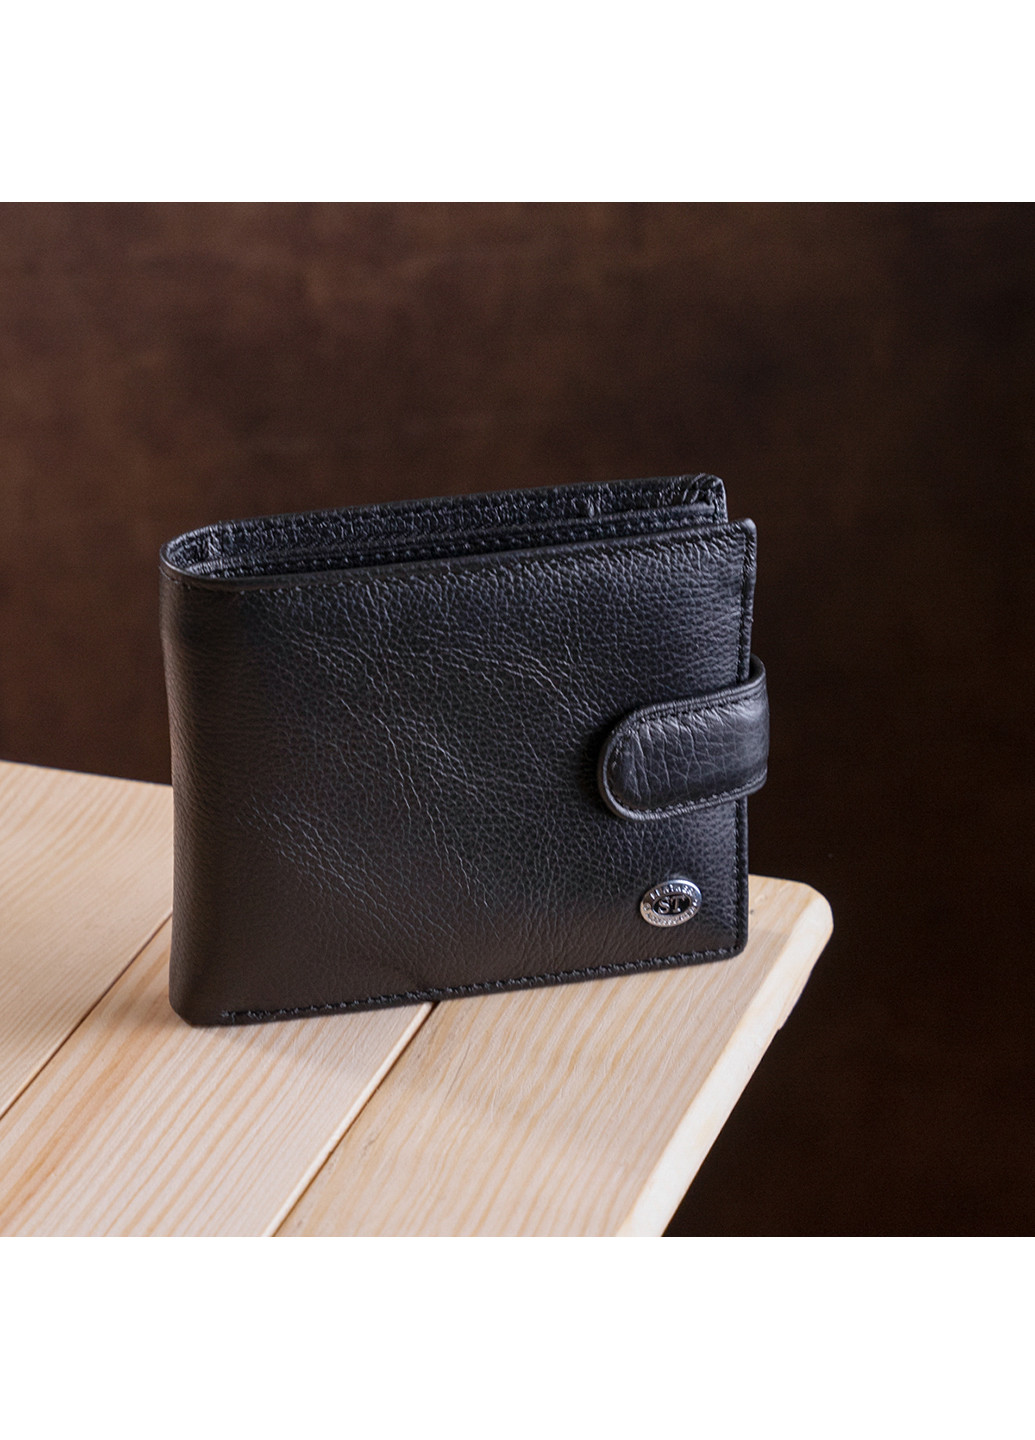 Мужской кожаный кошелек 11х9,5х2,5 см st leather (229460019)